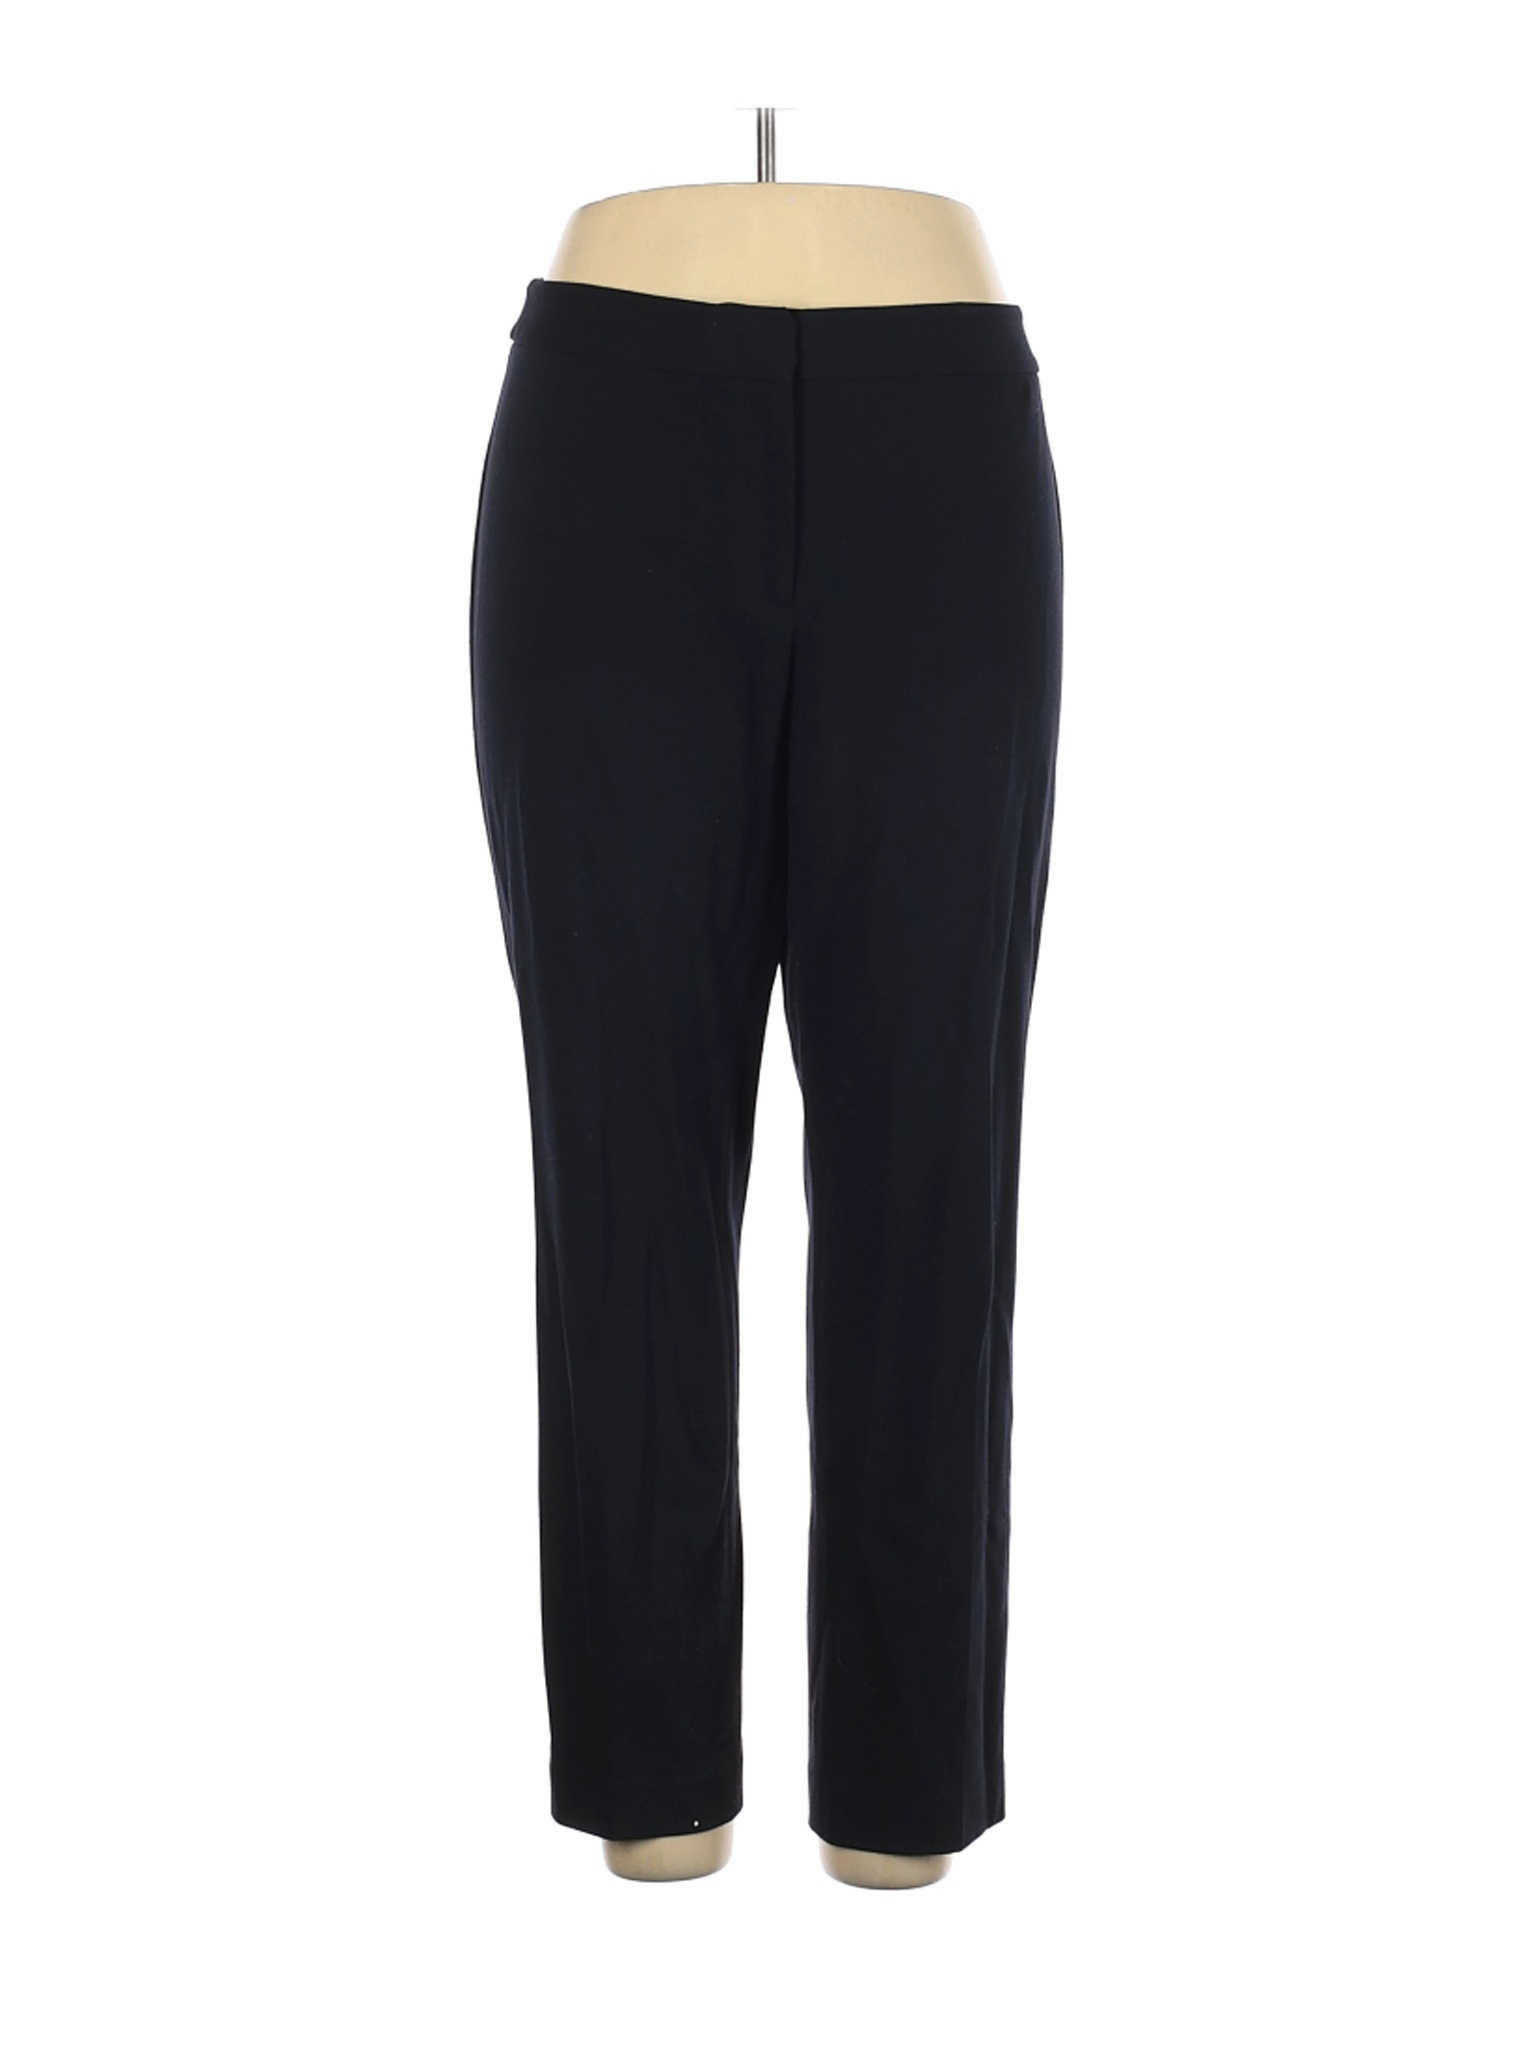 Talbots Women Black Casual Pants 14 Plus | eBay